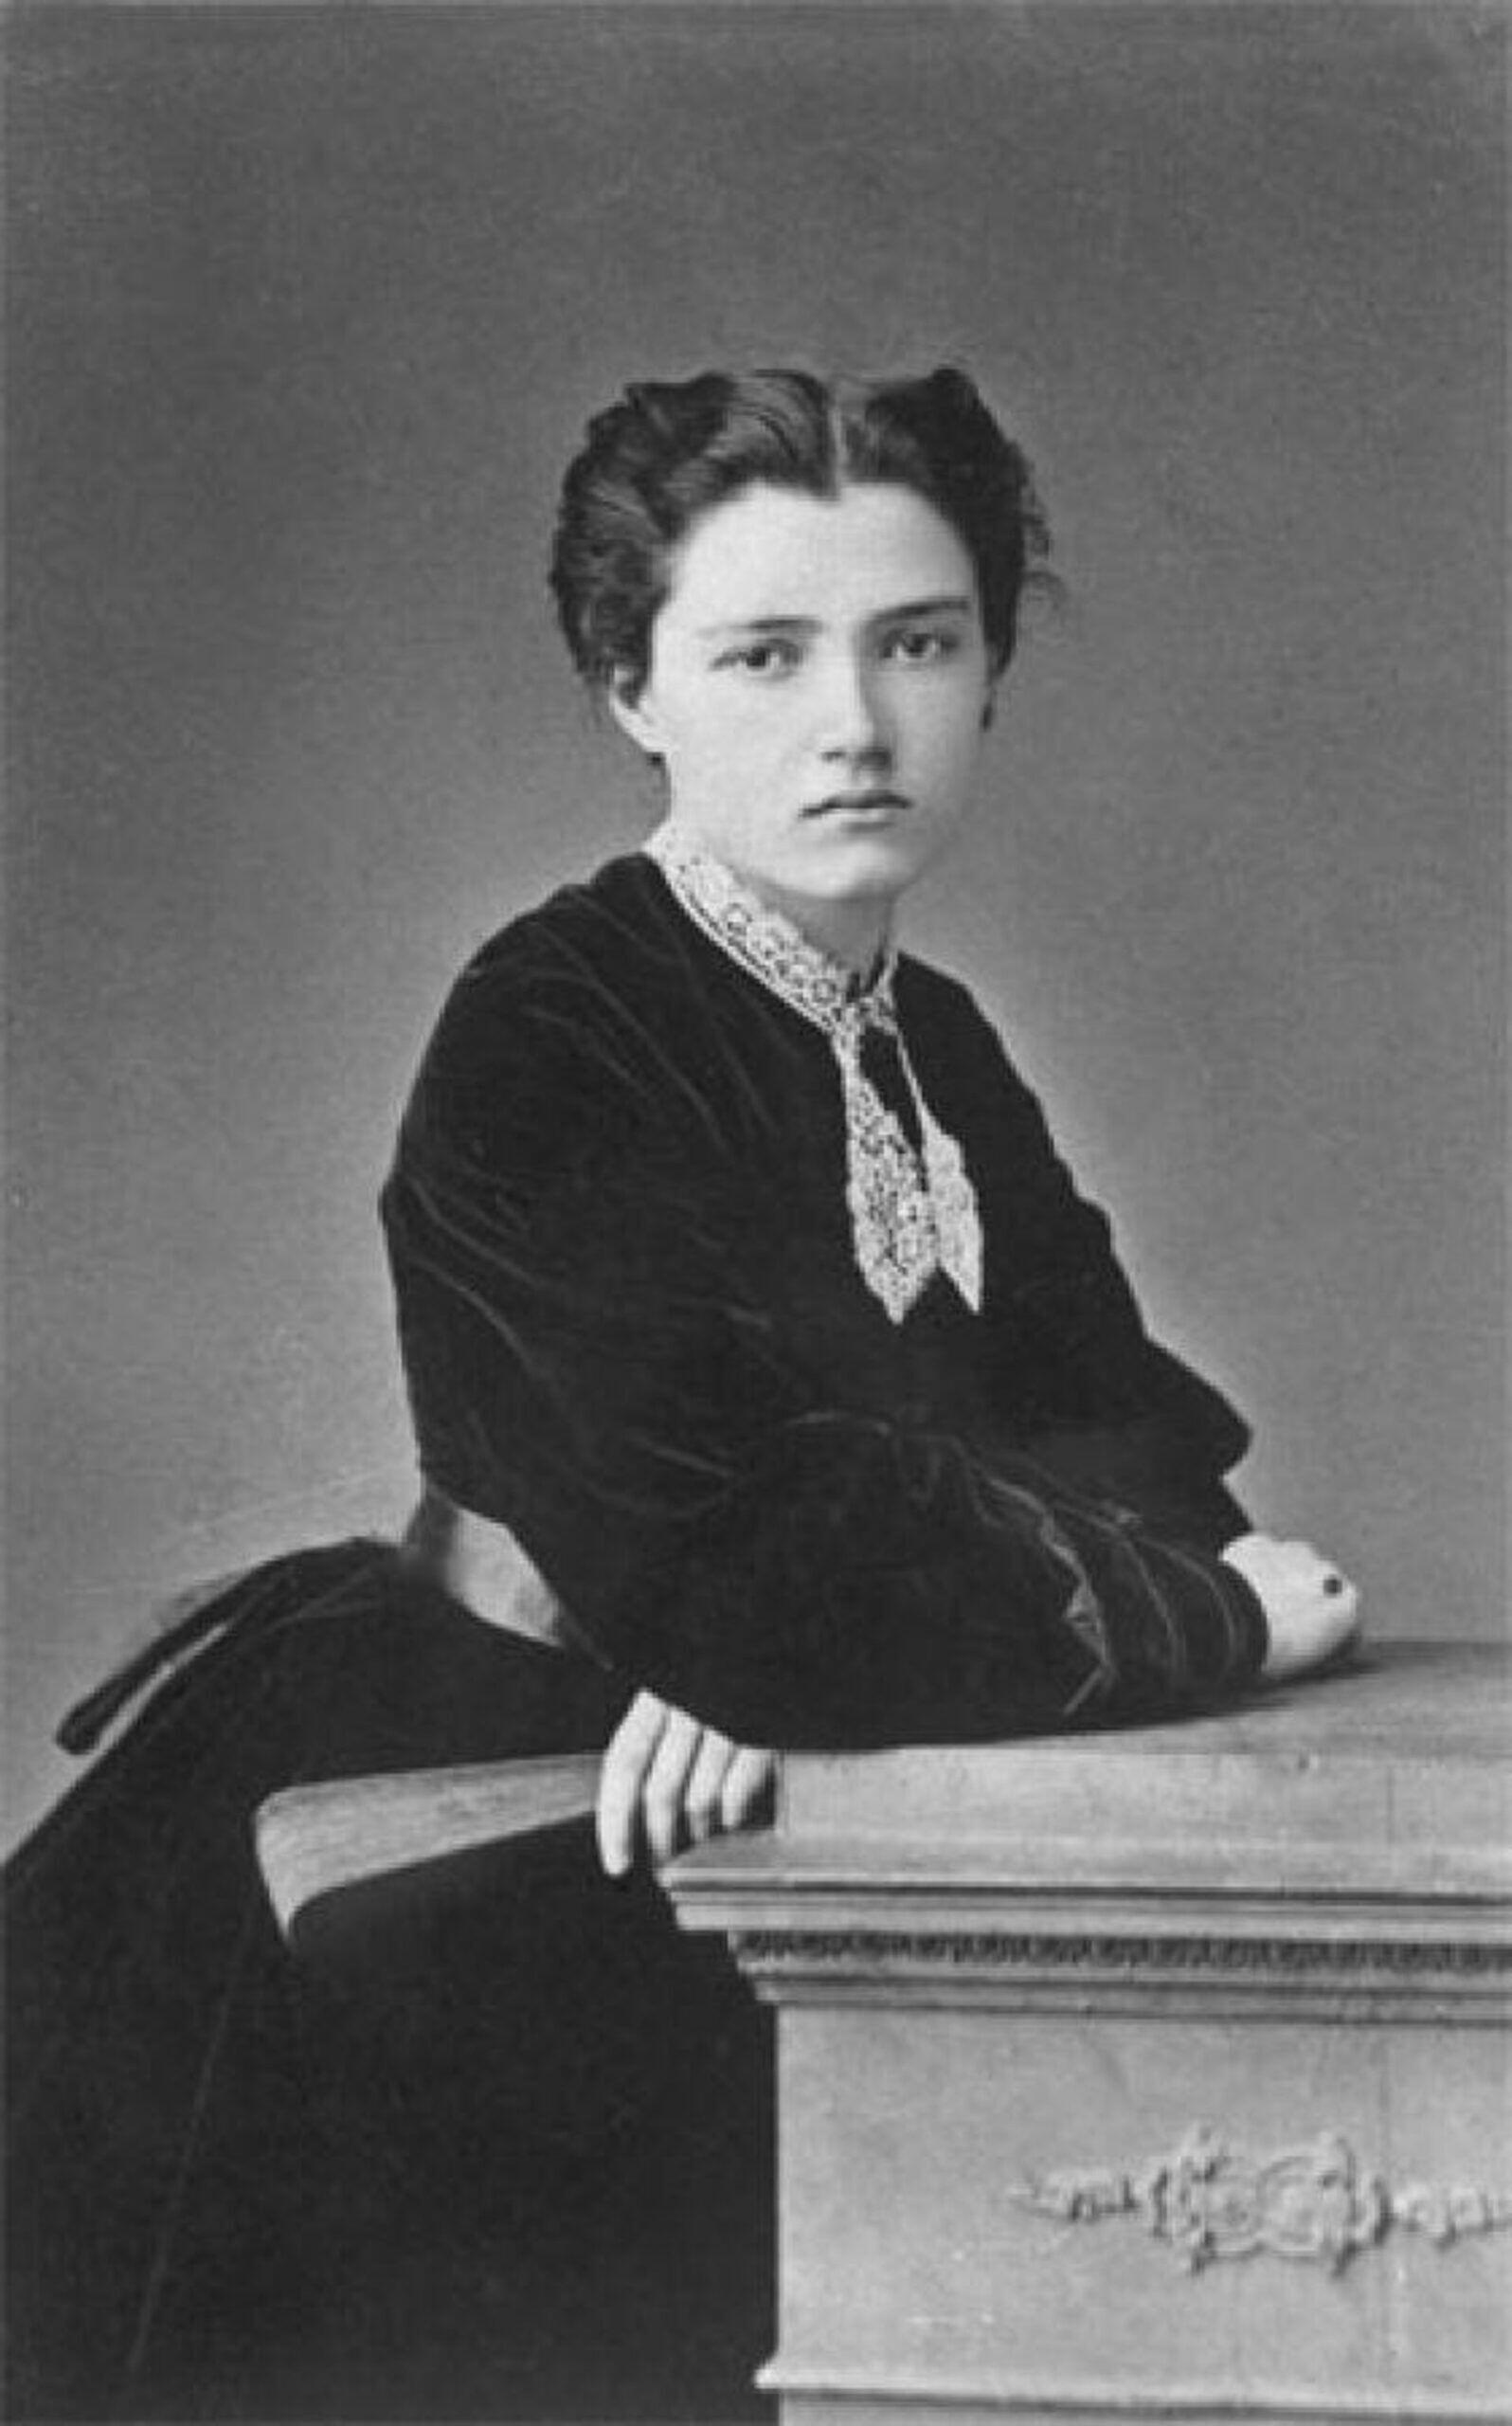 Zofia Urbanowska